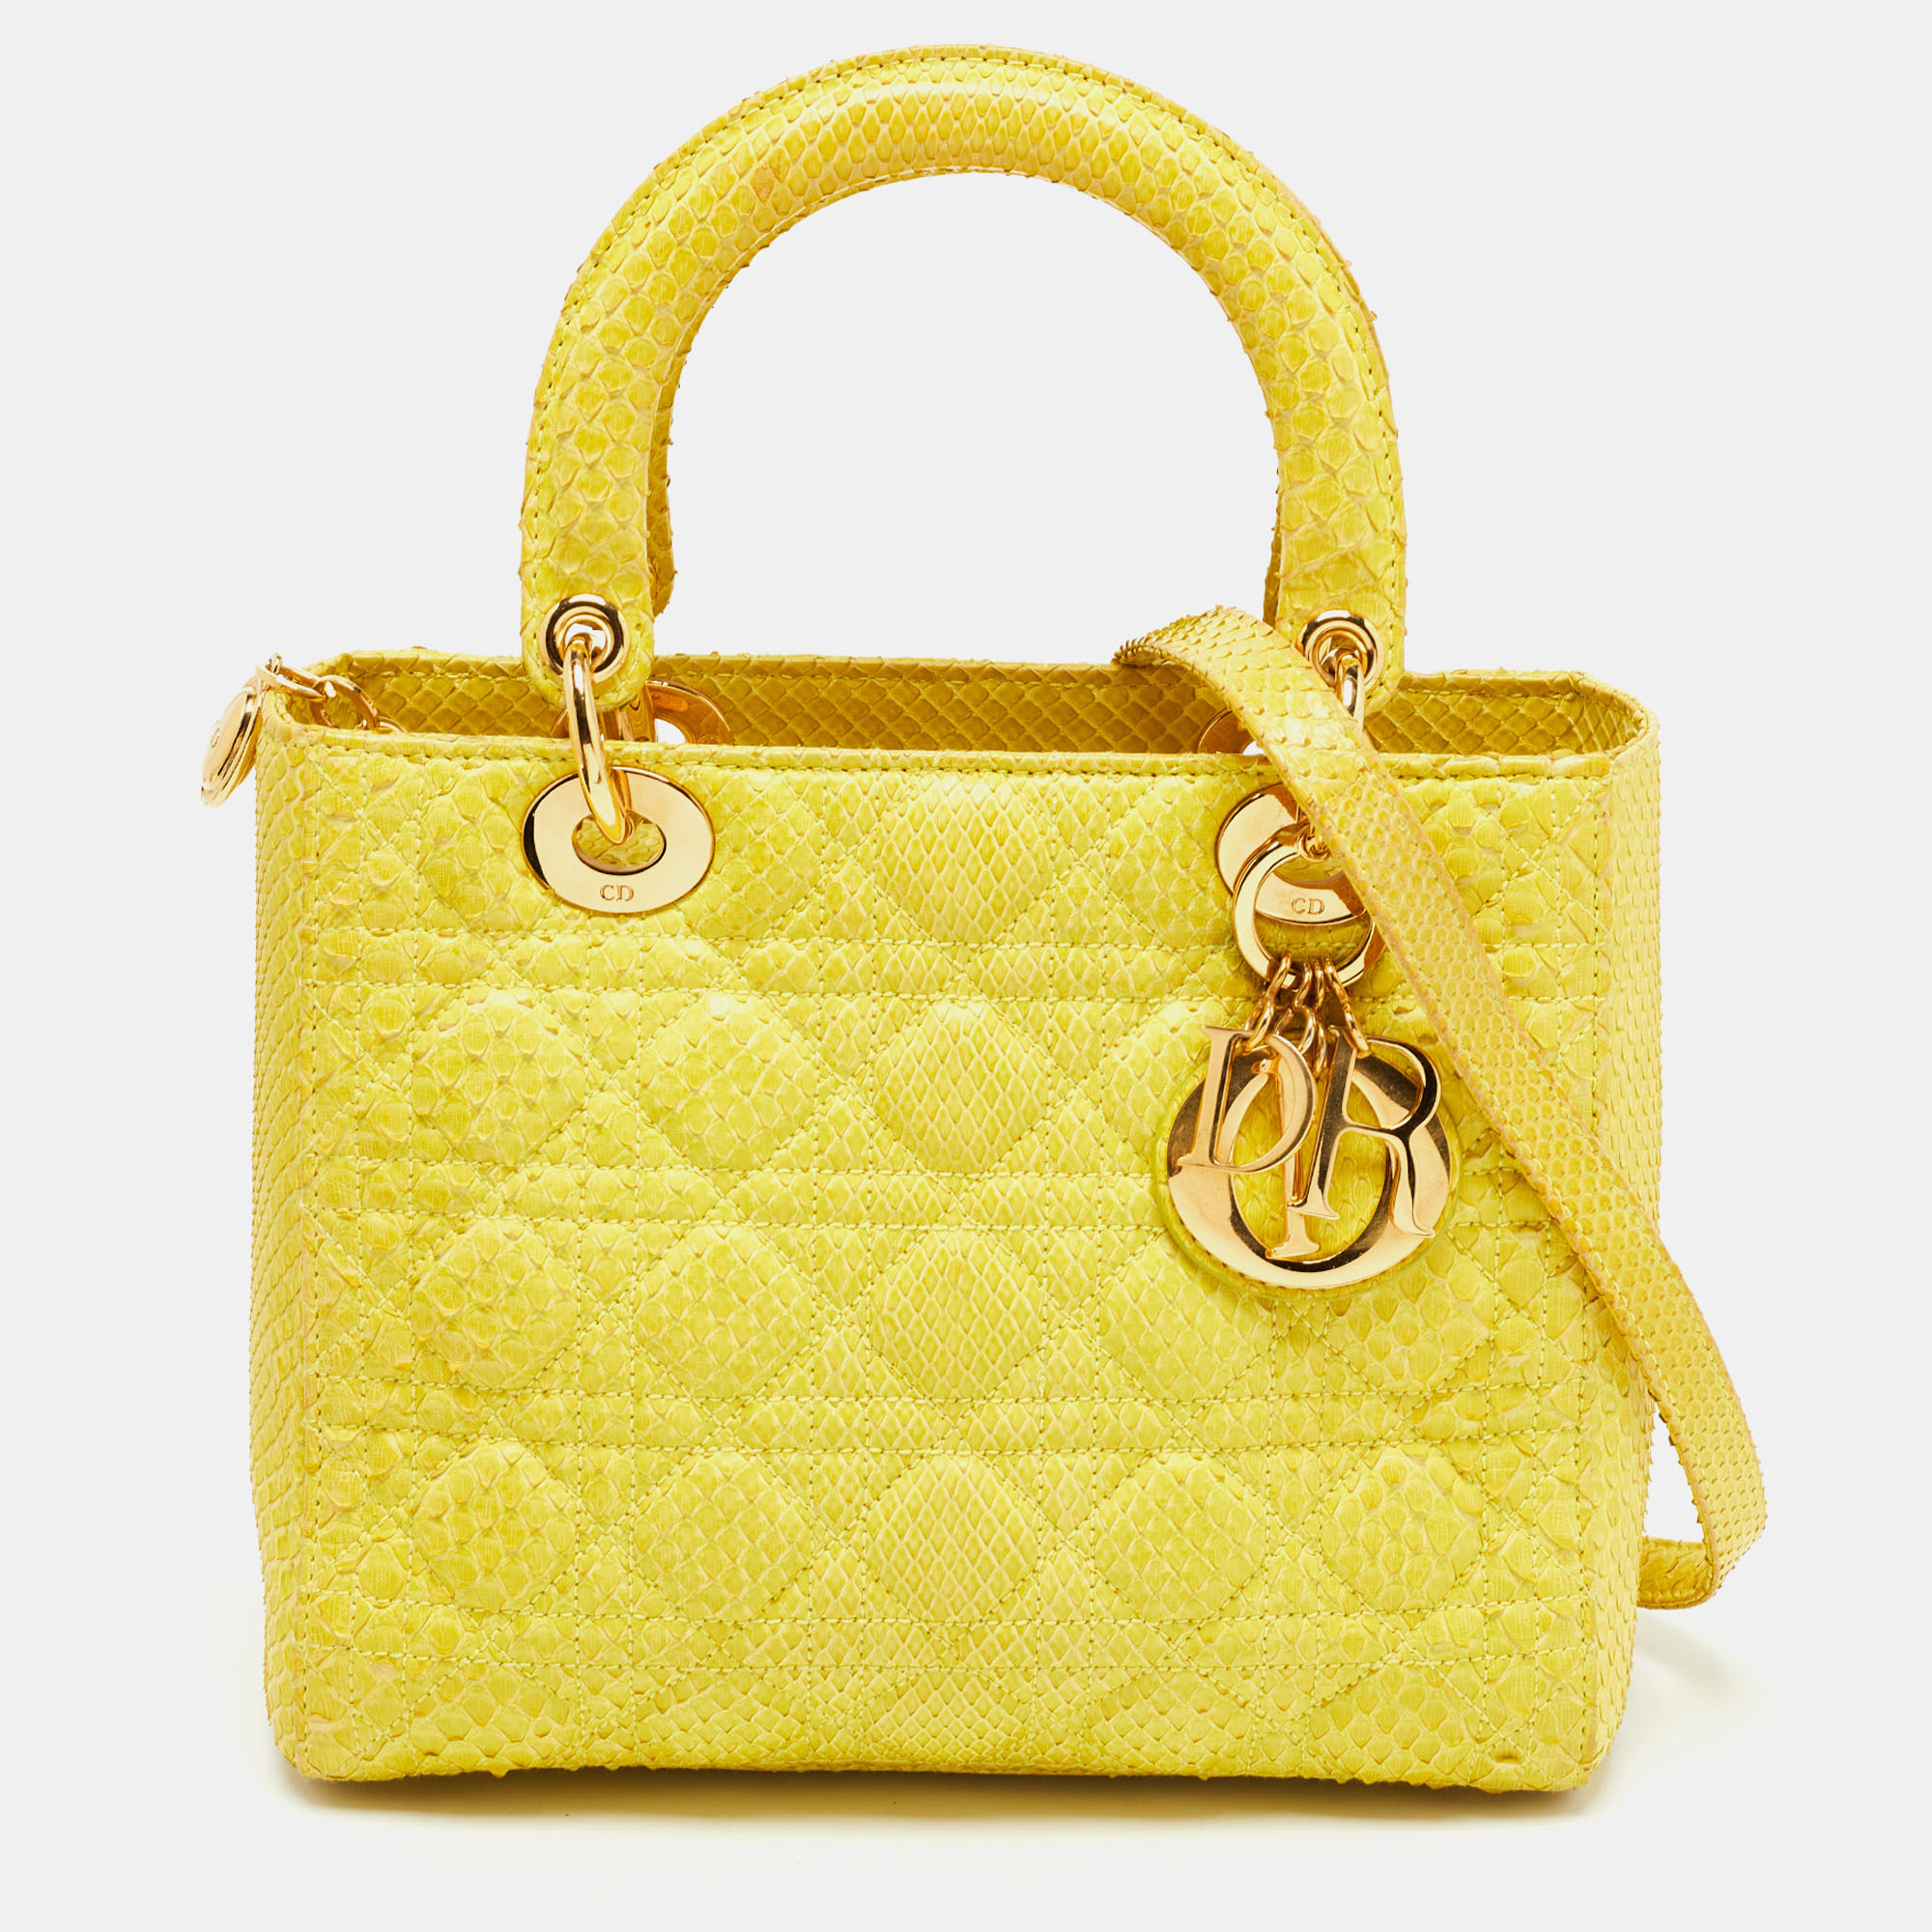 Dior Yellow Cannage Python Leather Medium Lady Dior Tote